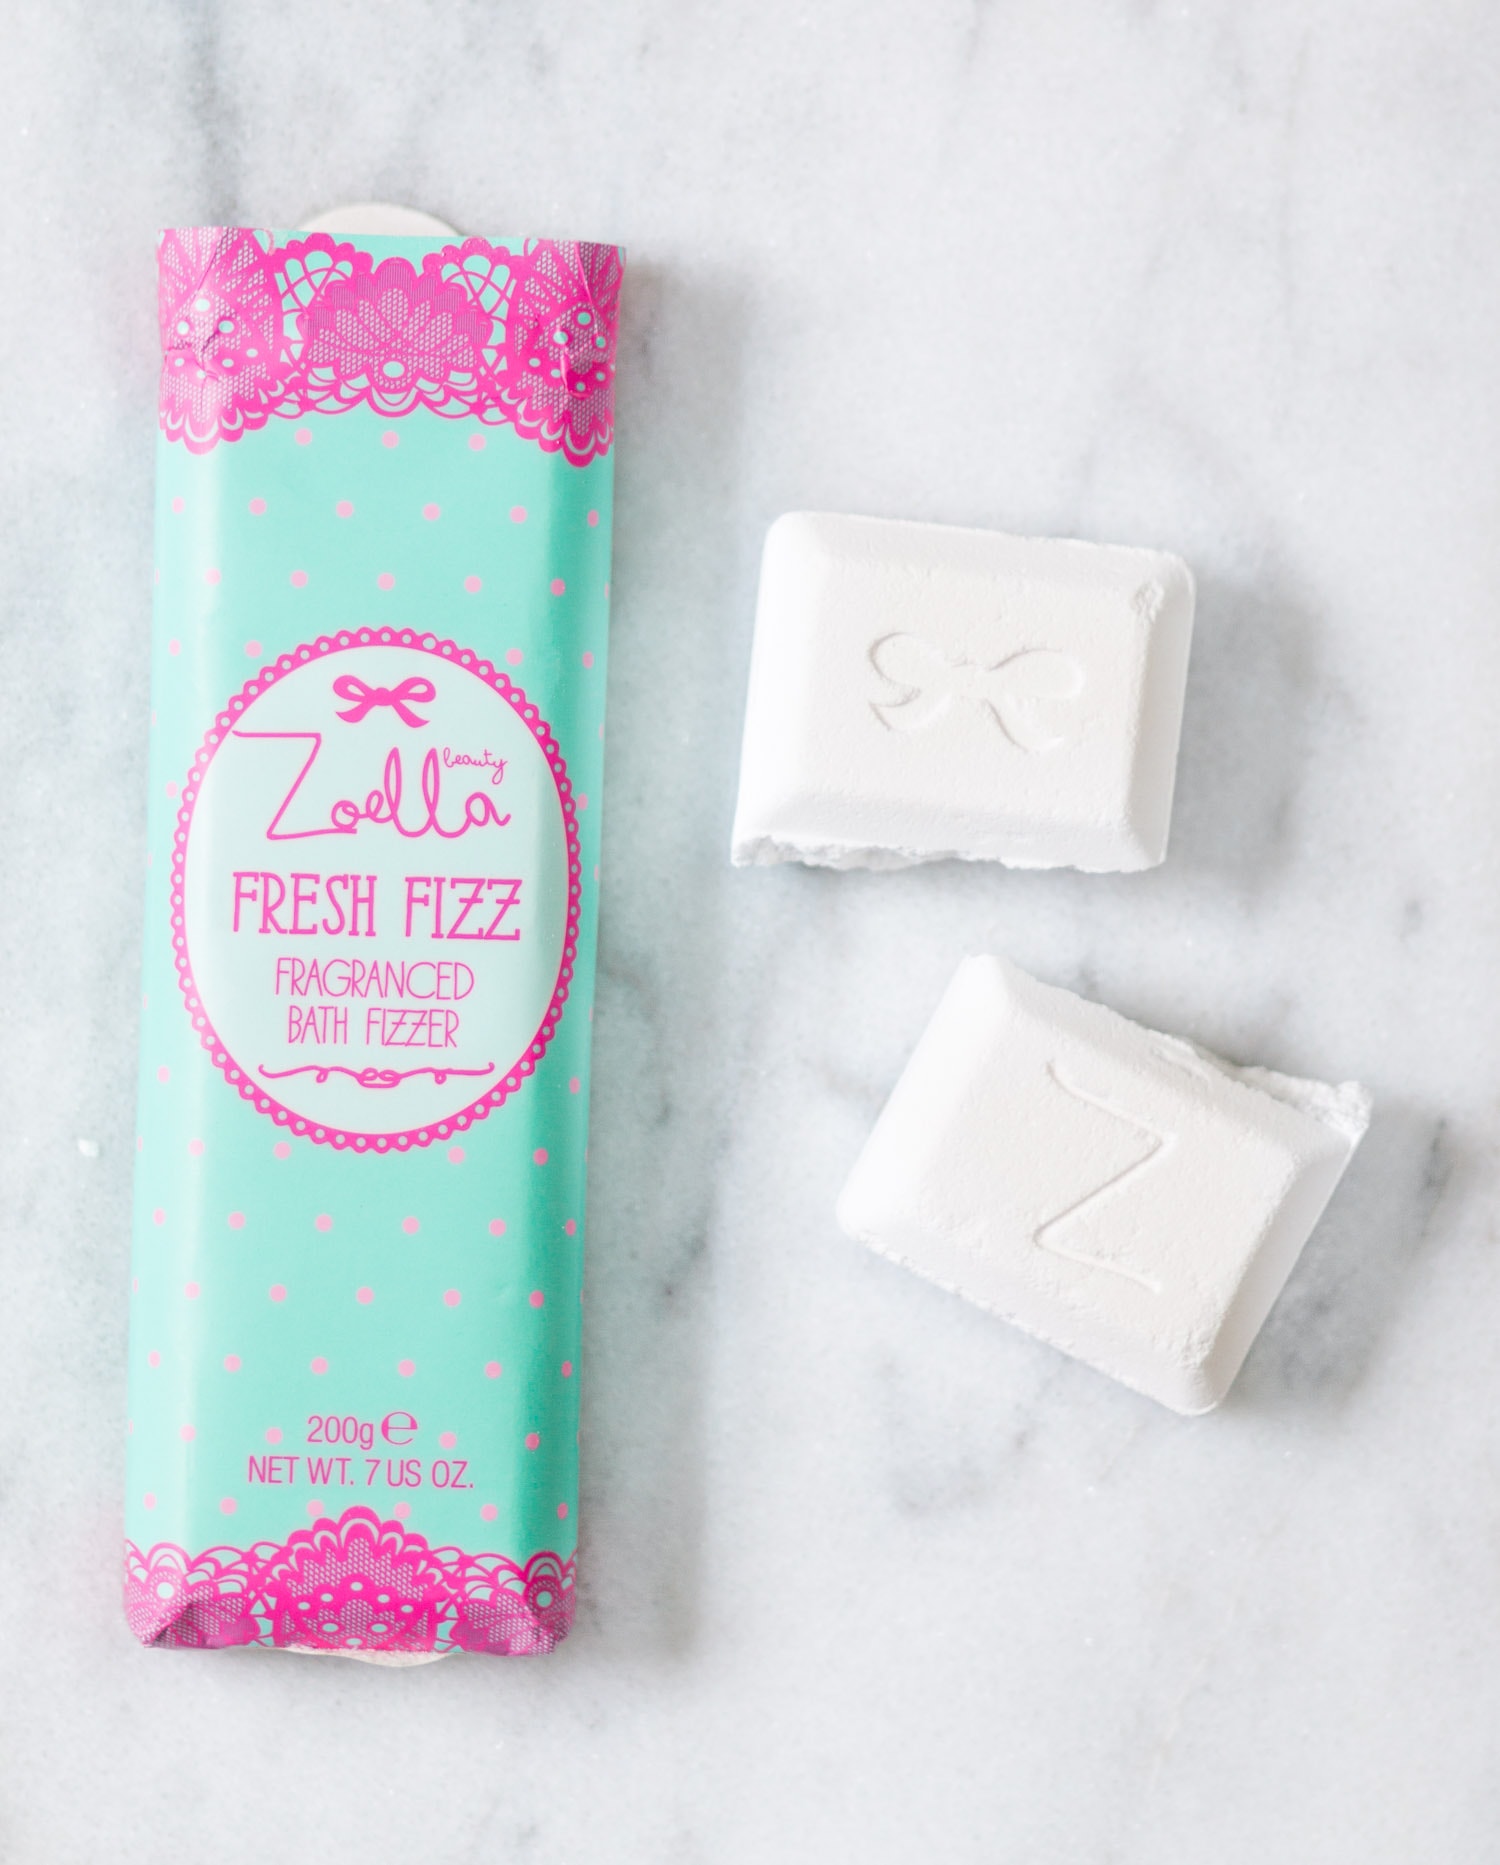 Zoella Beauty Fresh Fizz fragranced bath fizzer and bath bomb | Review by beauty blogger Ashley Brooke Nicholas